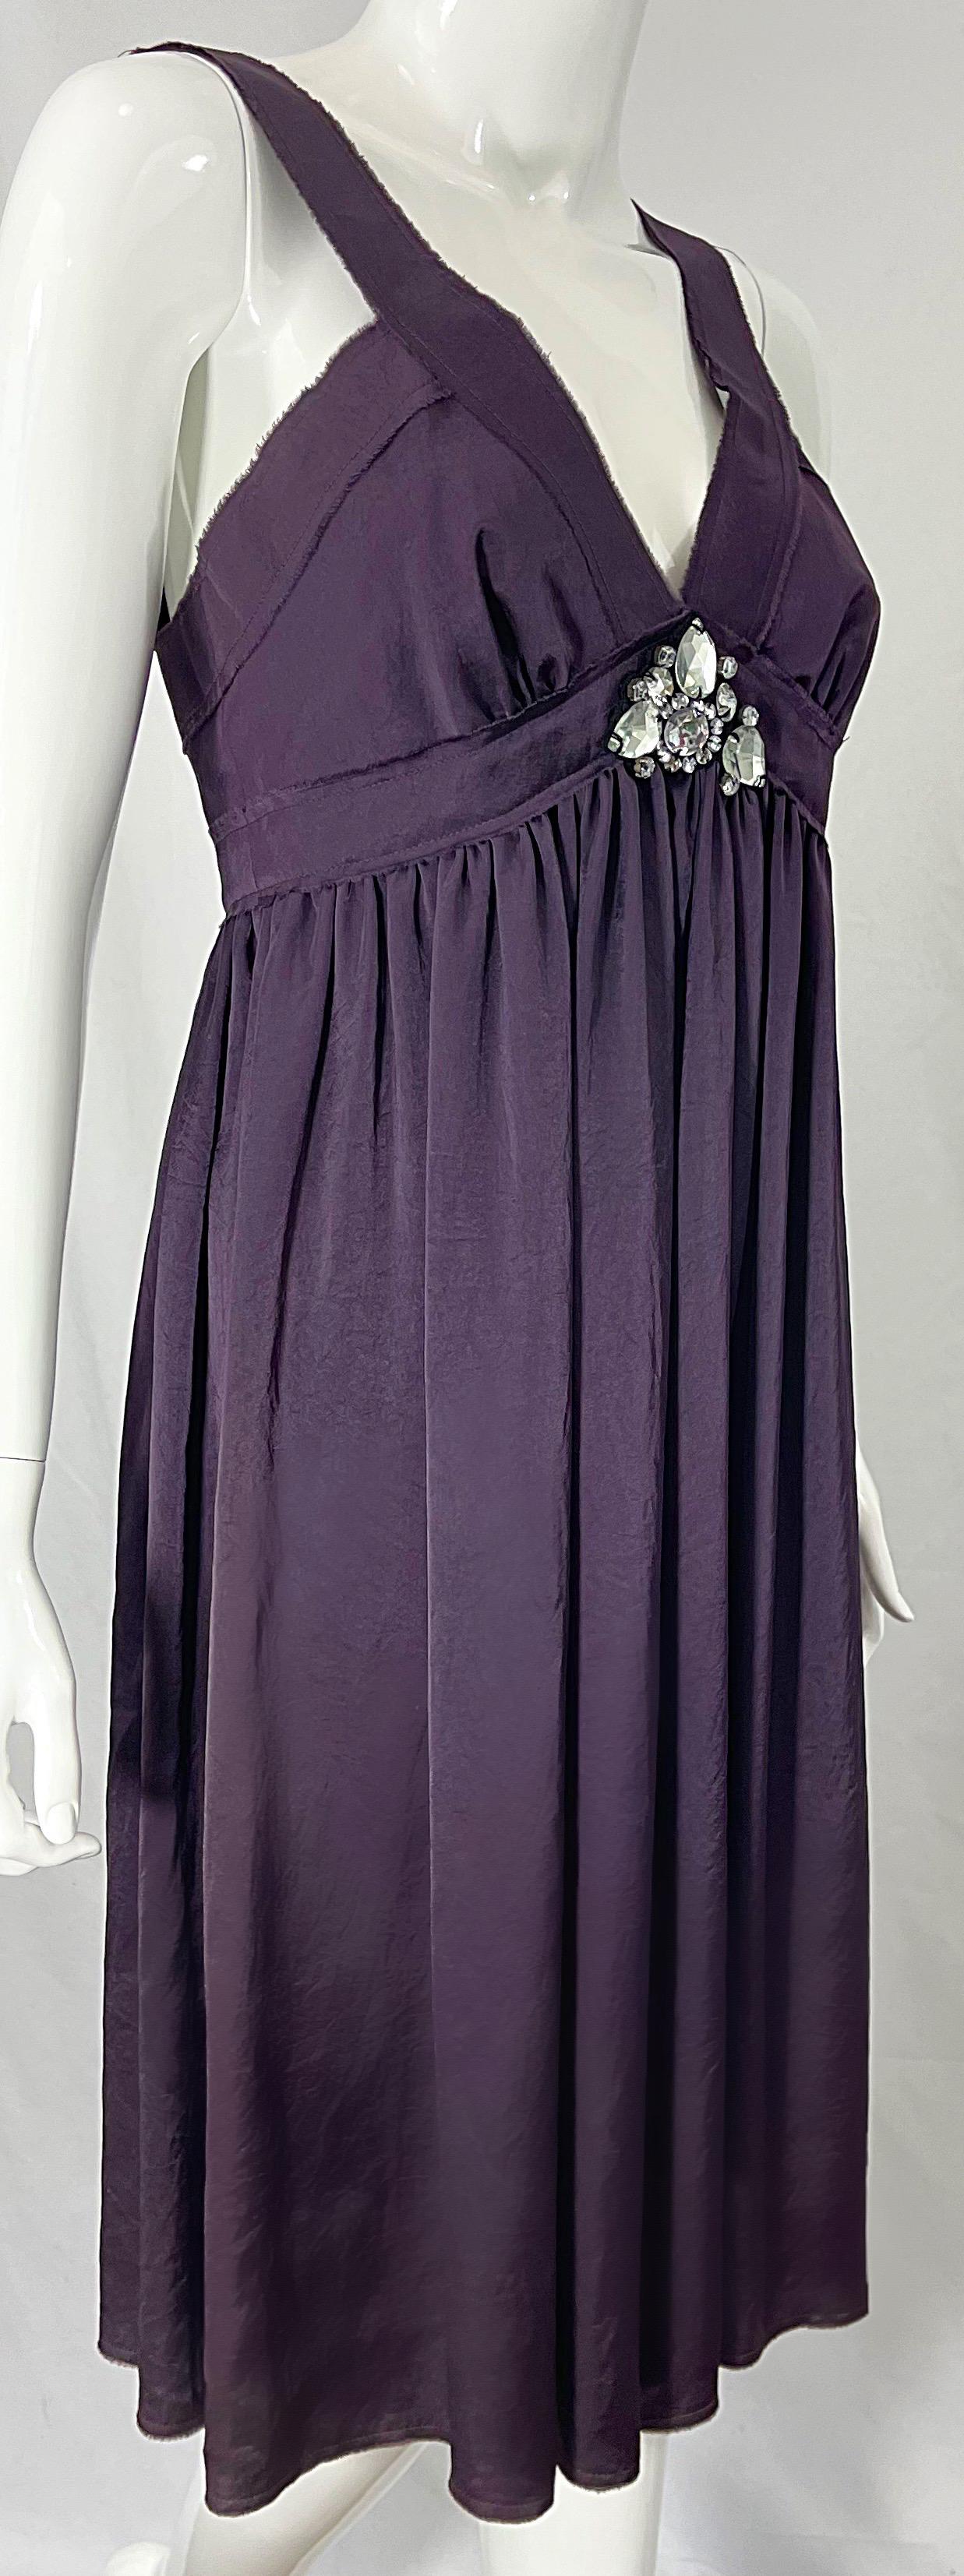 Lanvin S/S 2007 Alber Elbaz Sz 38 Purple Rhinestone Encrusted Empire Waist Dress For Sale 6